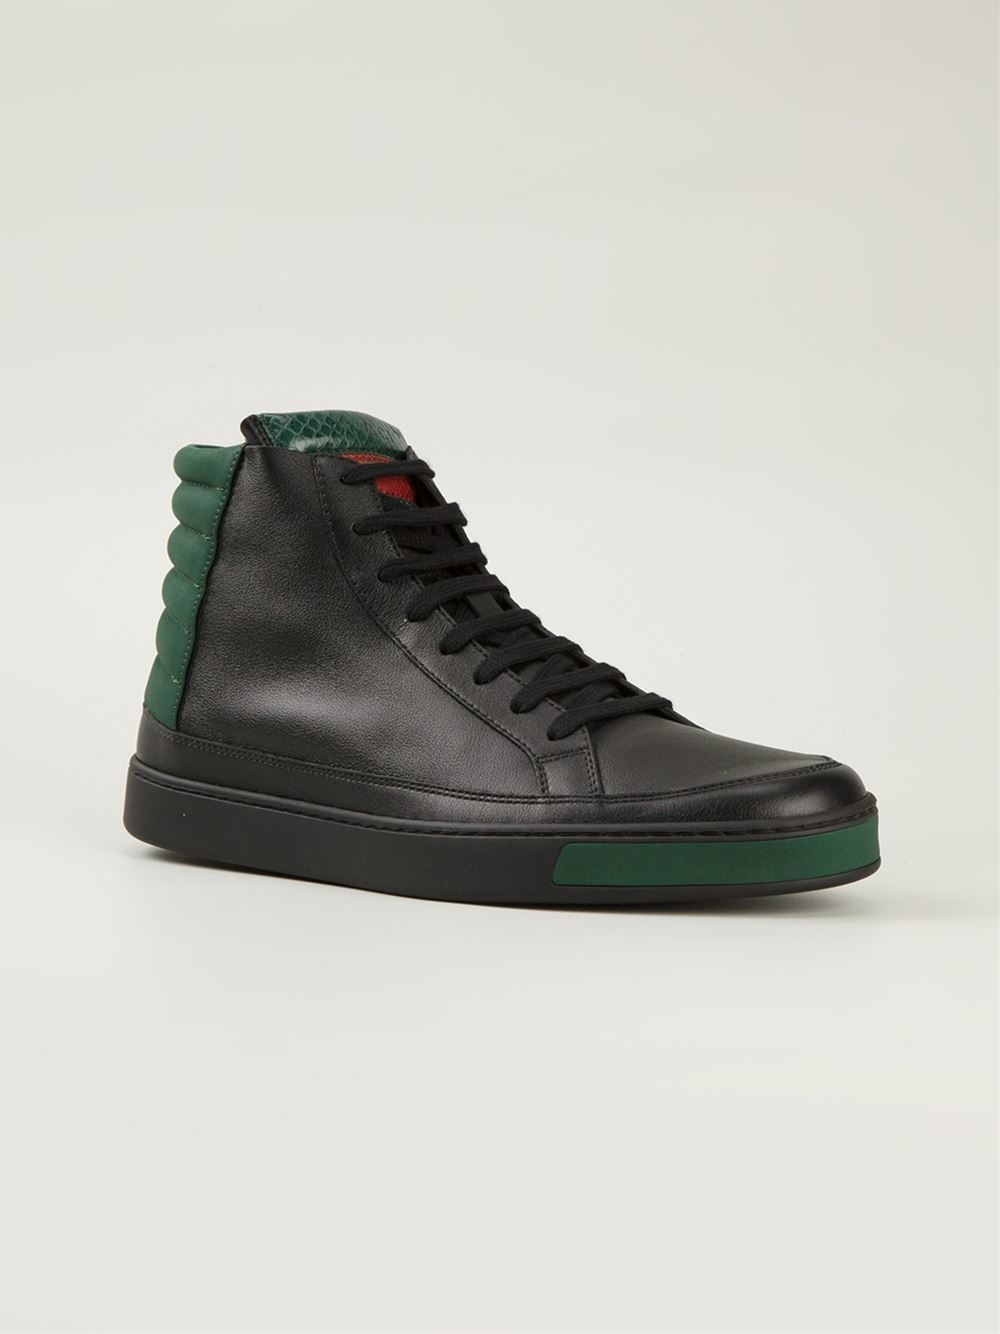 Lyst - Gucci Ribbed Detail Hi-top Sneakers in Black for Men